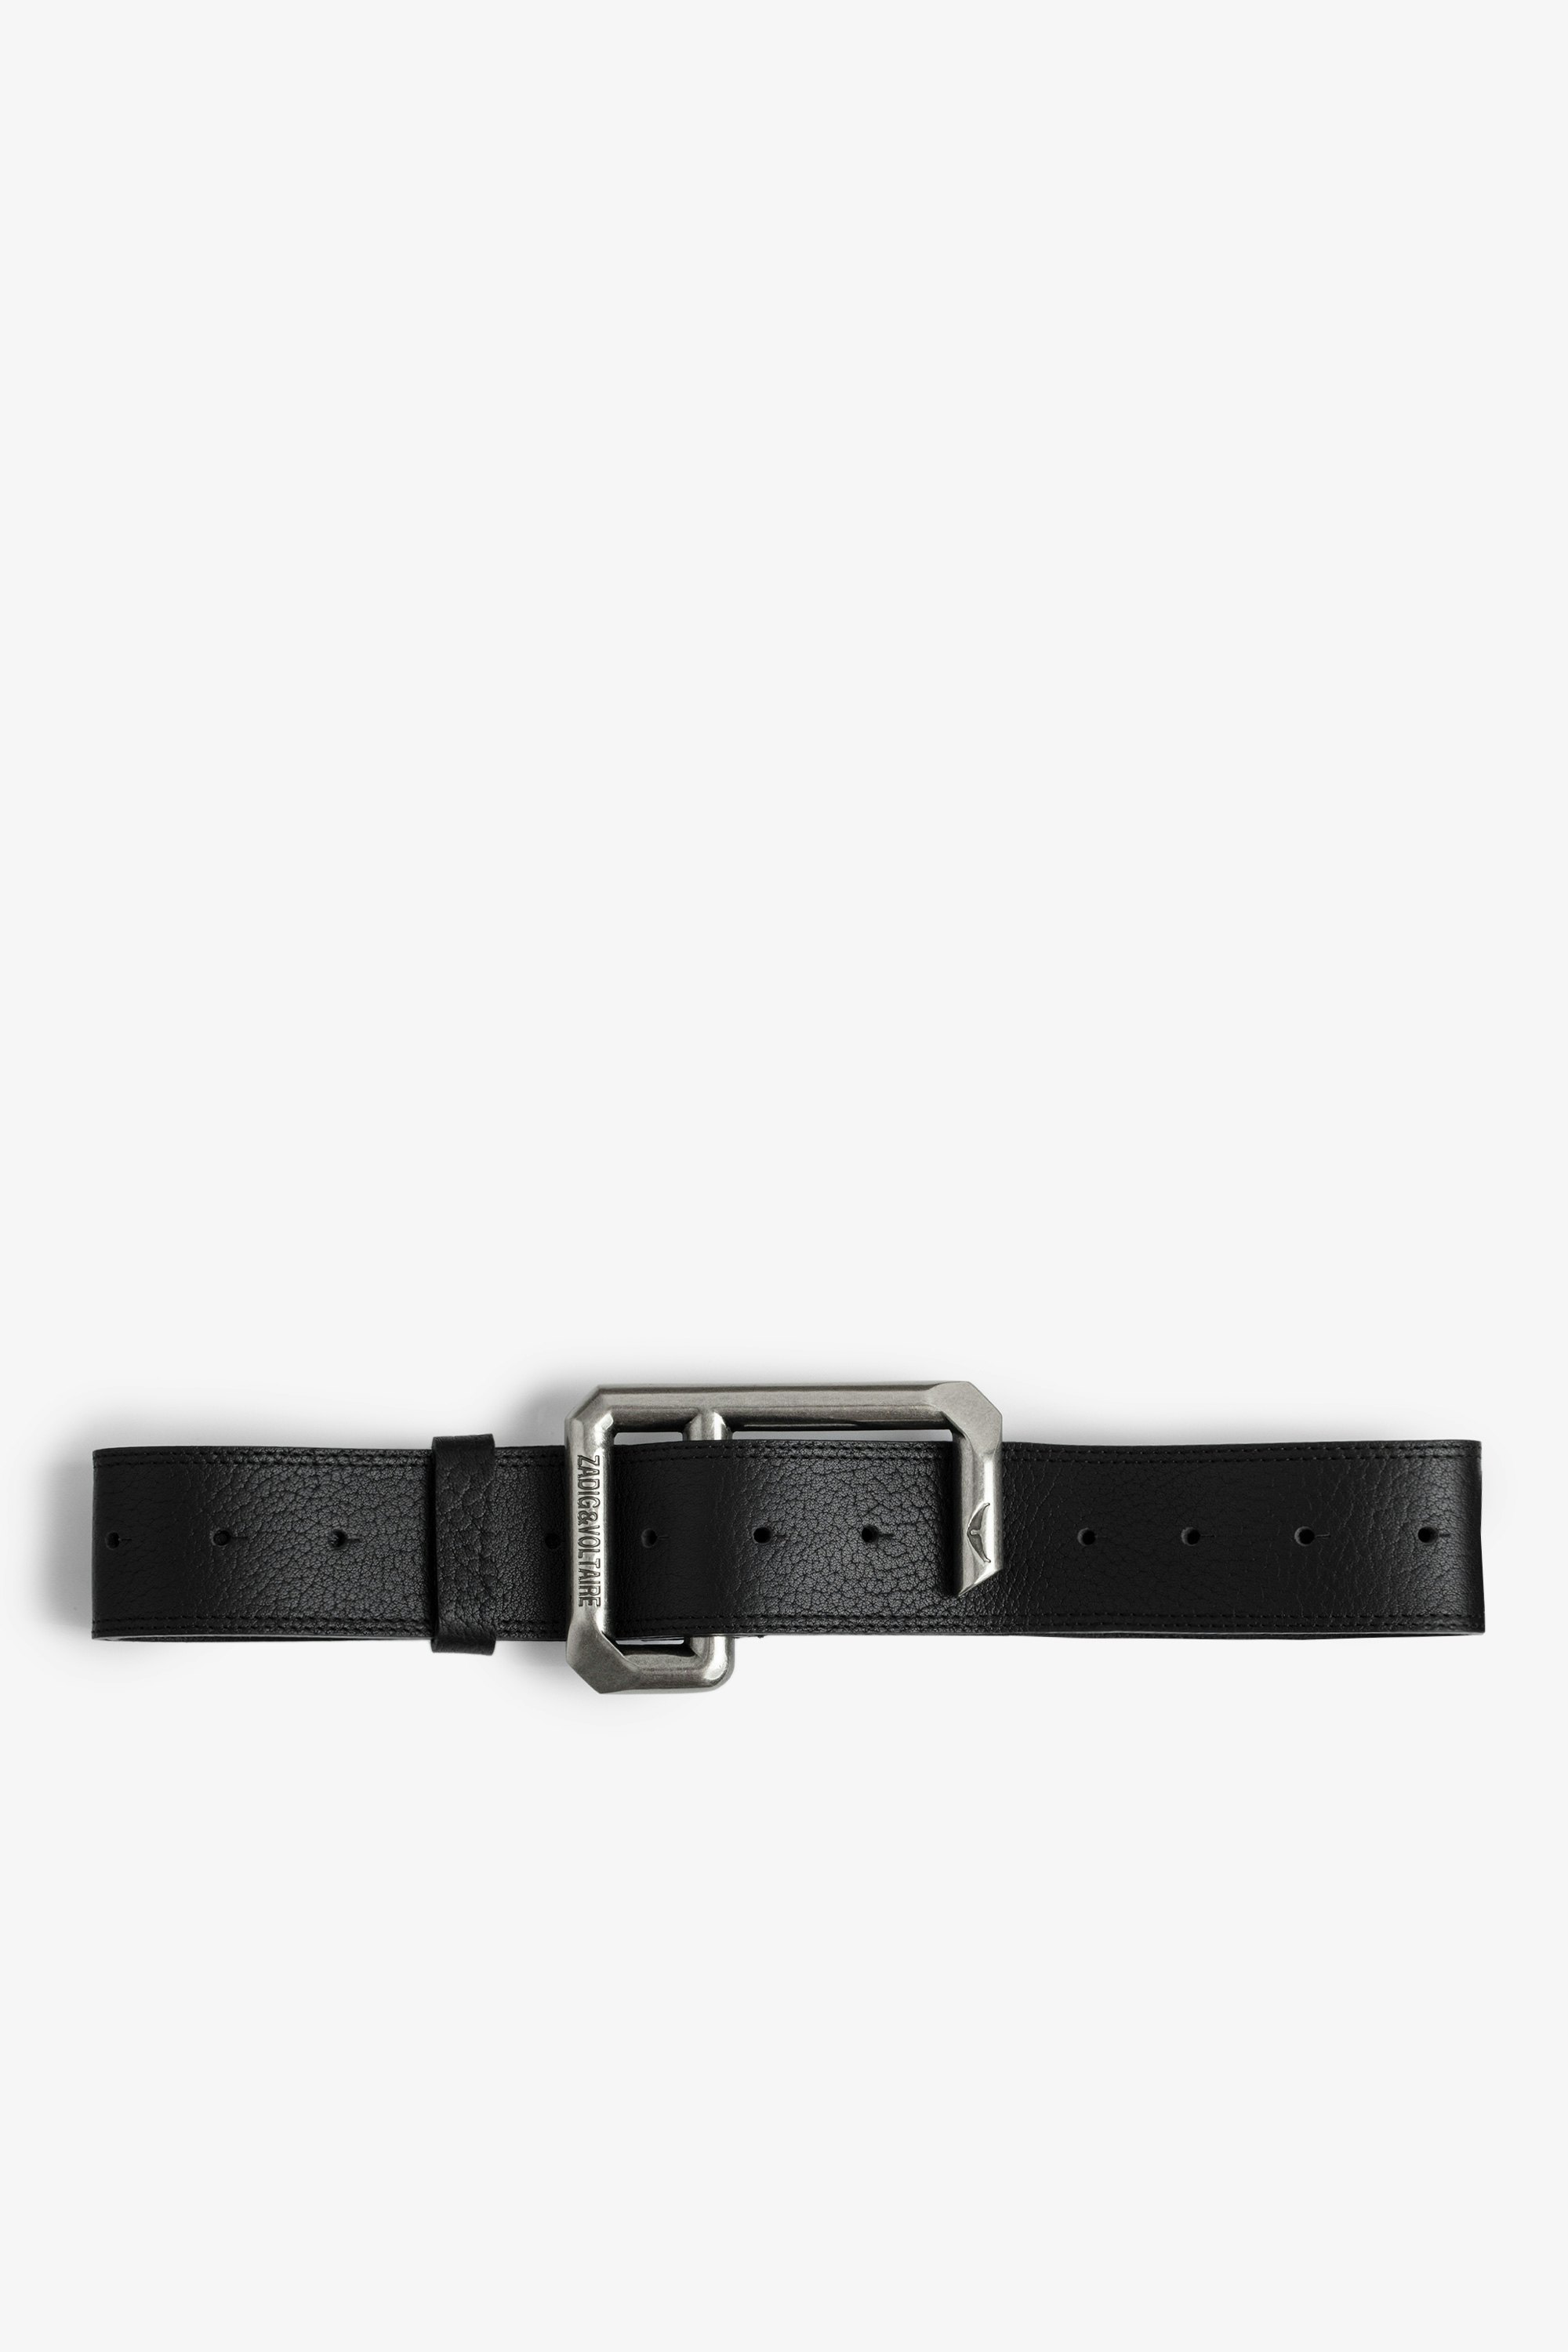 La Cecilia 50 mm ベルト Women's adjustable black leather belt with C-shaped buckle